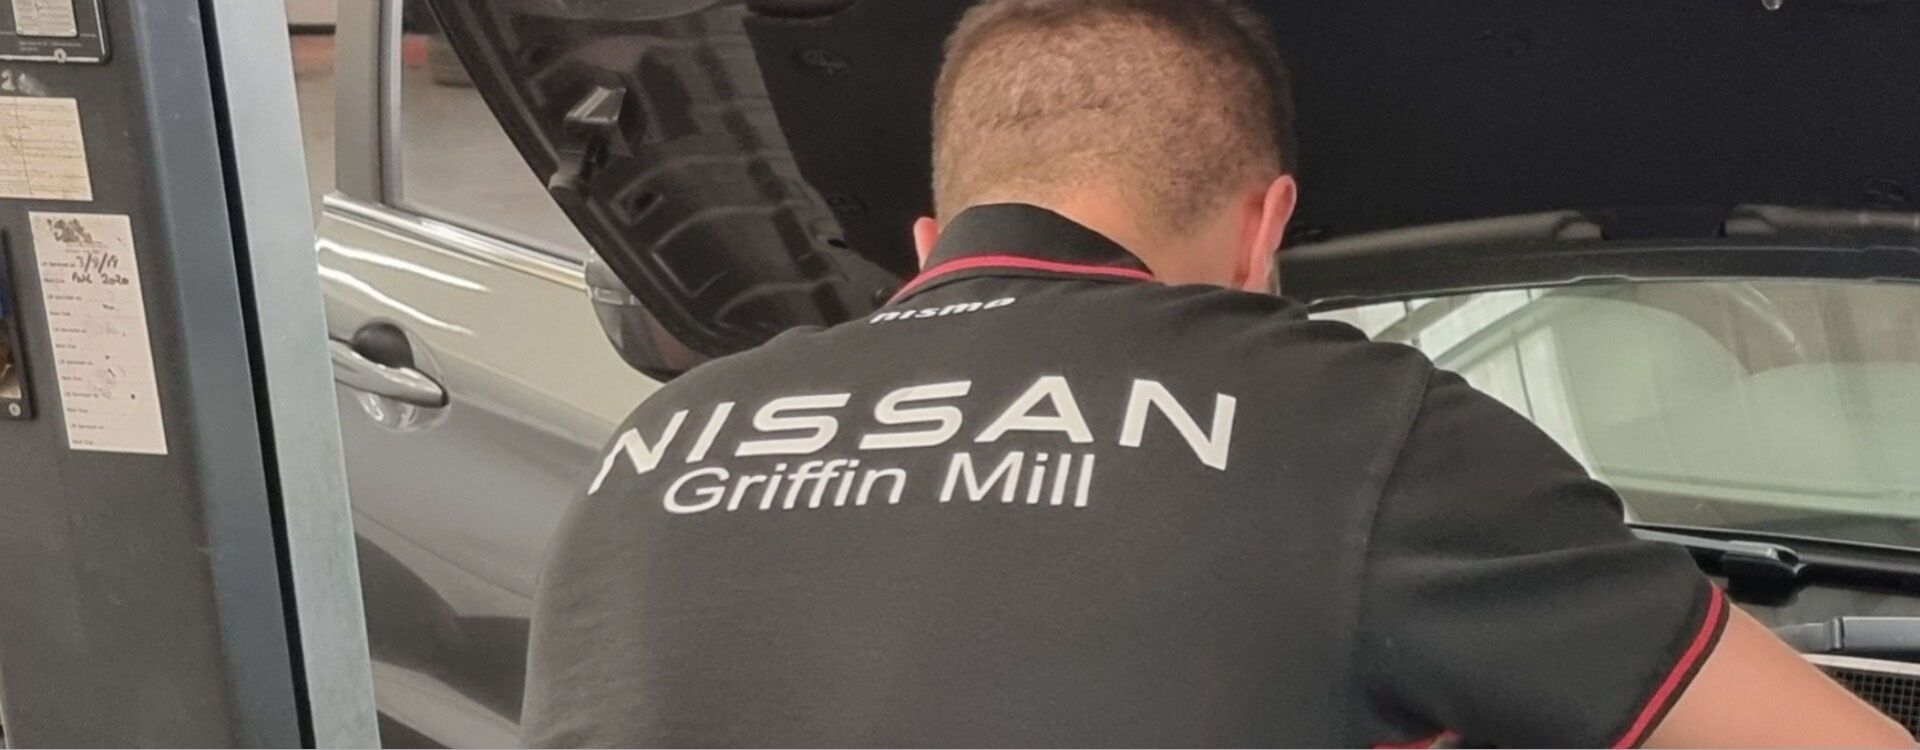 Nissan Hero Image